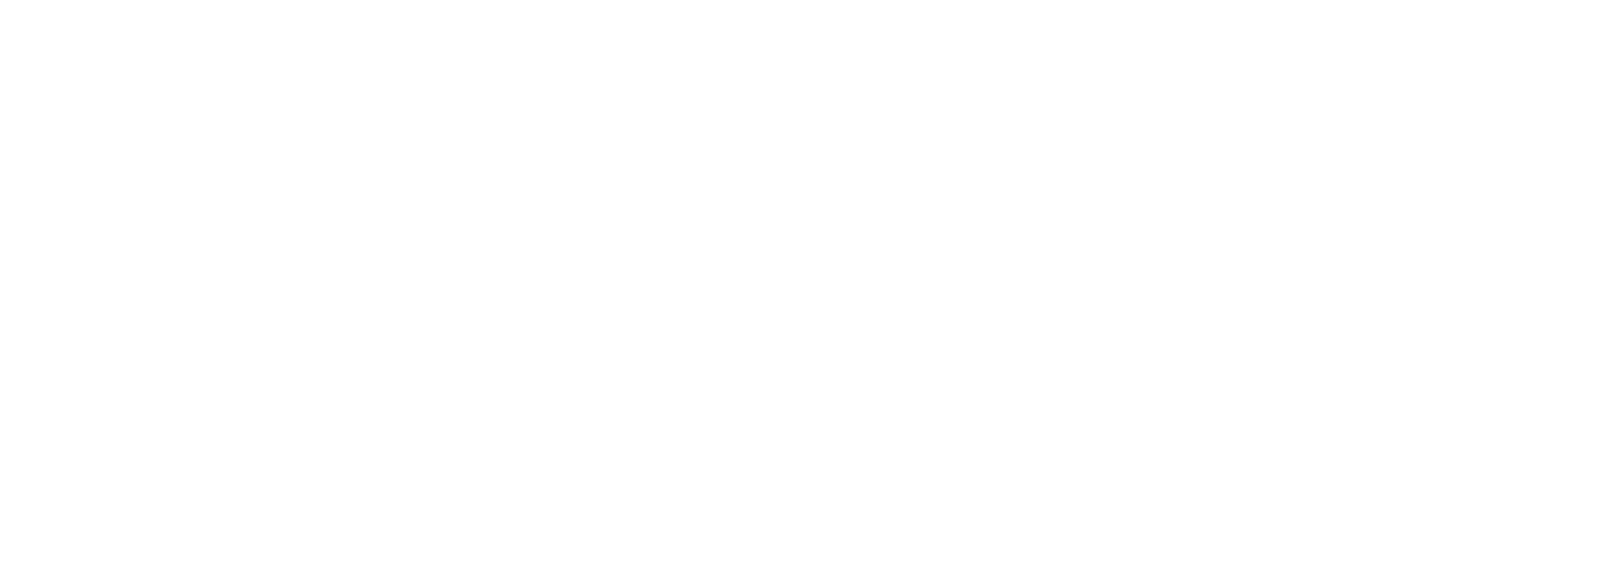 University College Prague (UCP)